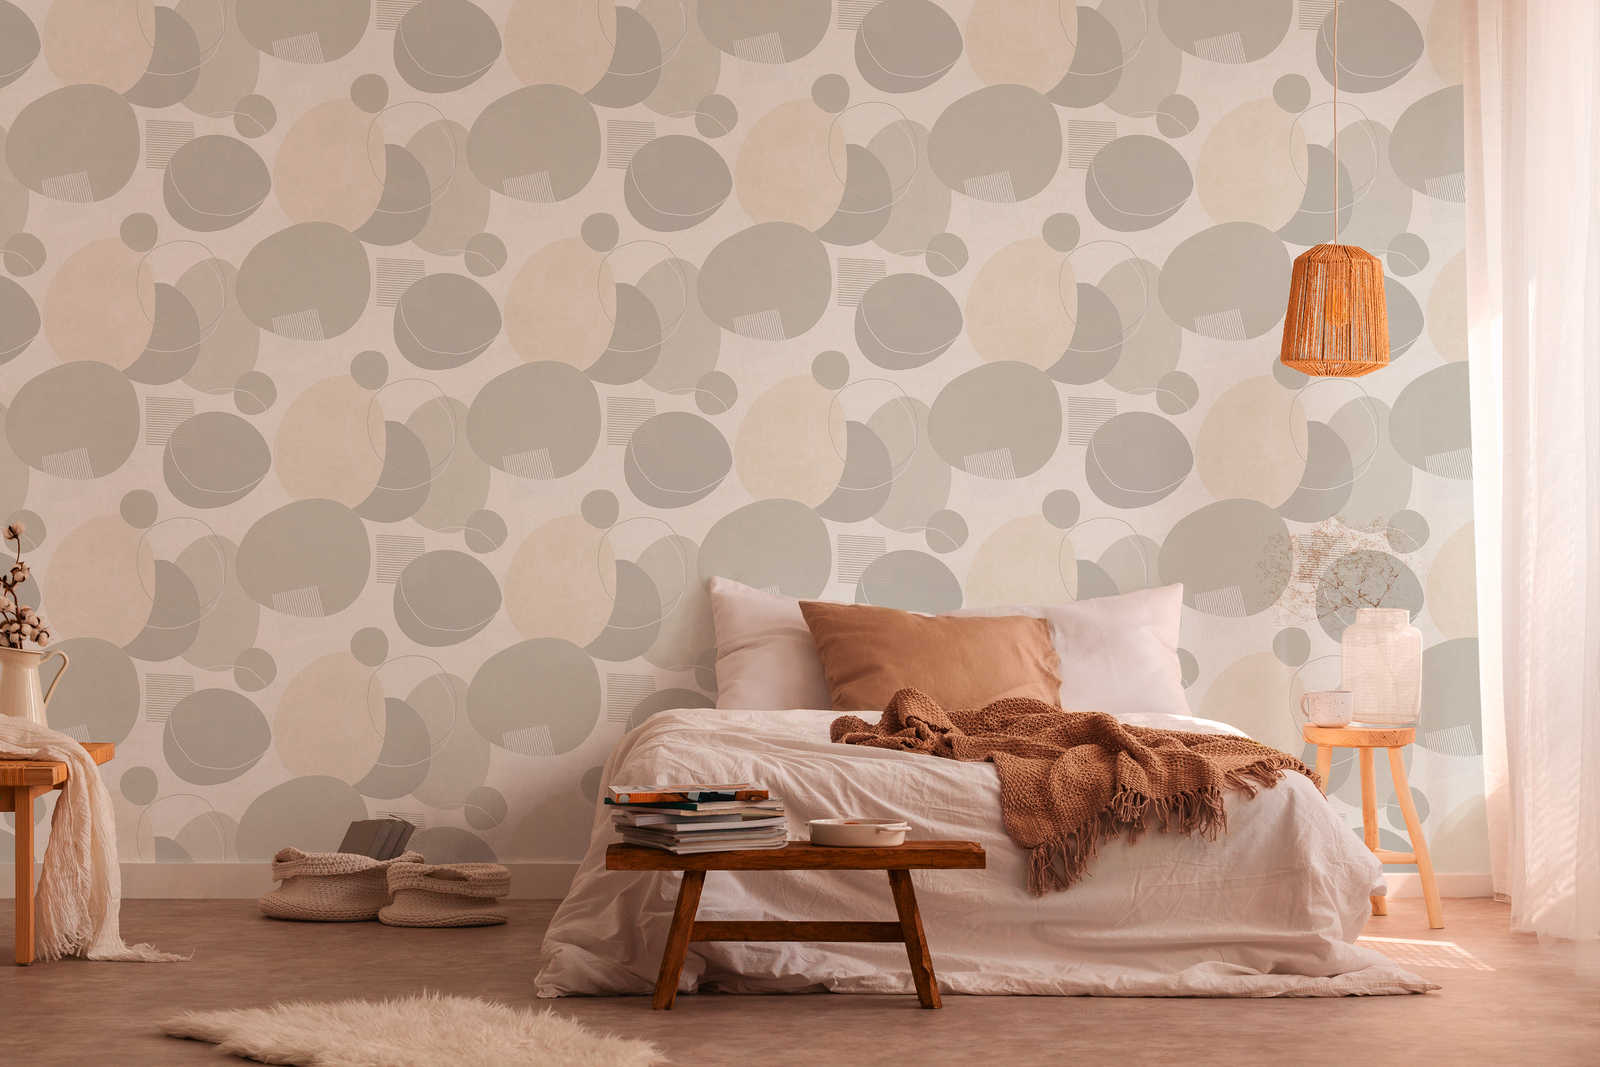             Retro wallpaper with organic pattern - beige, cream
        